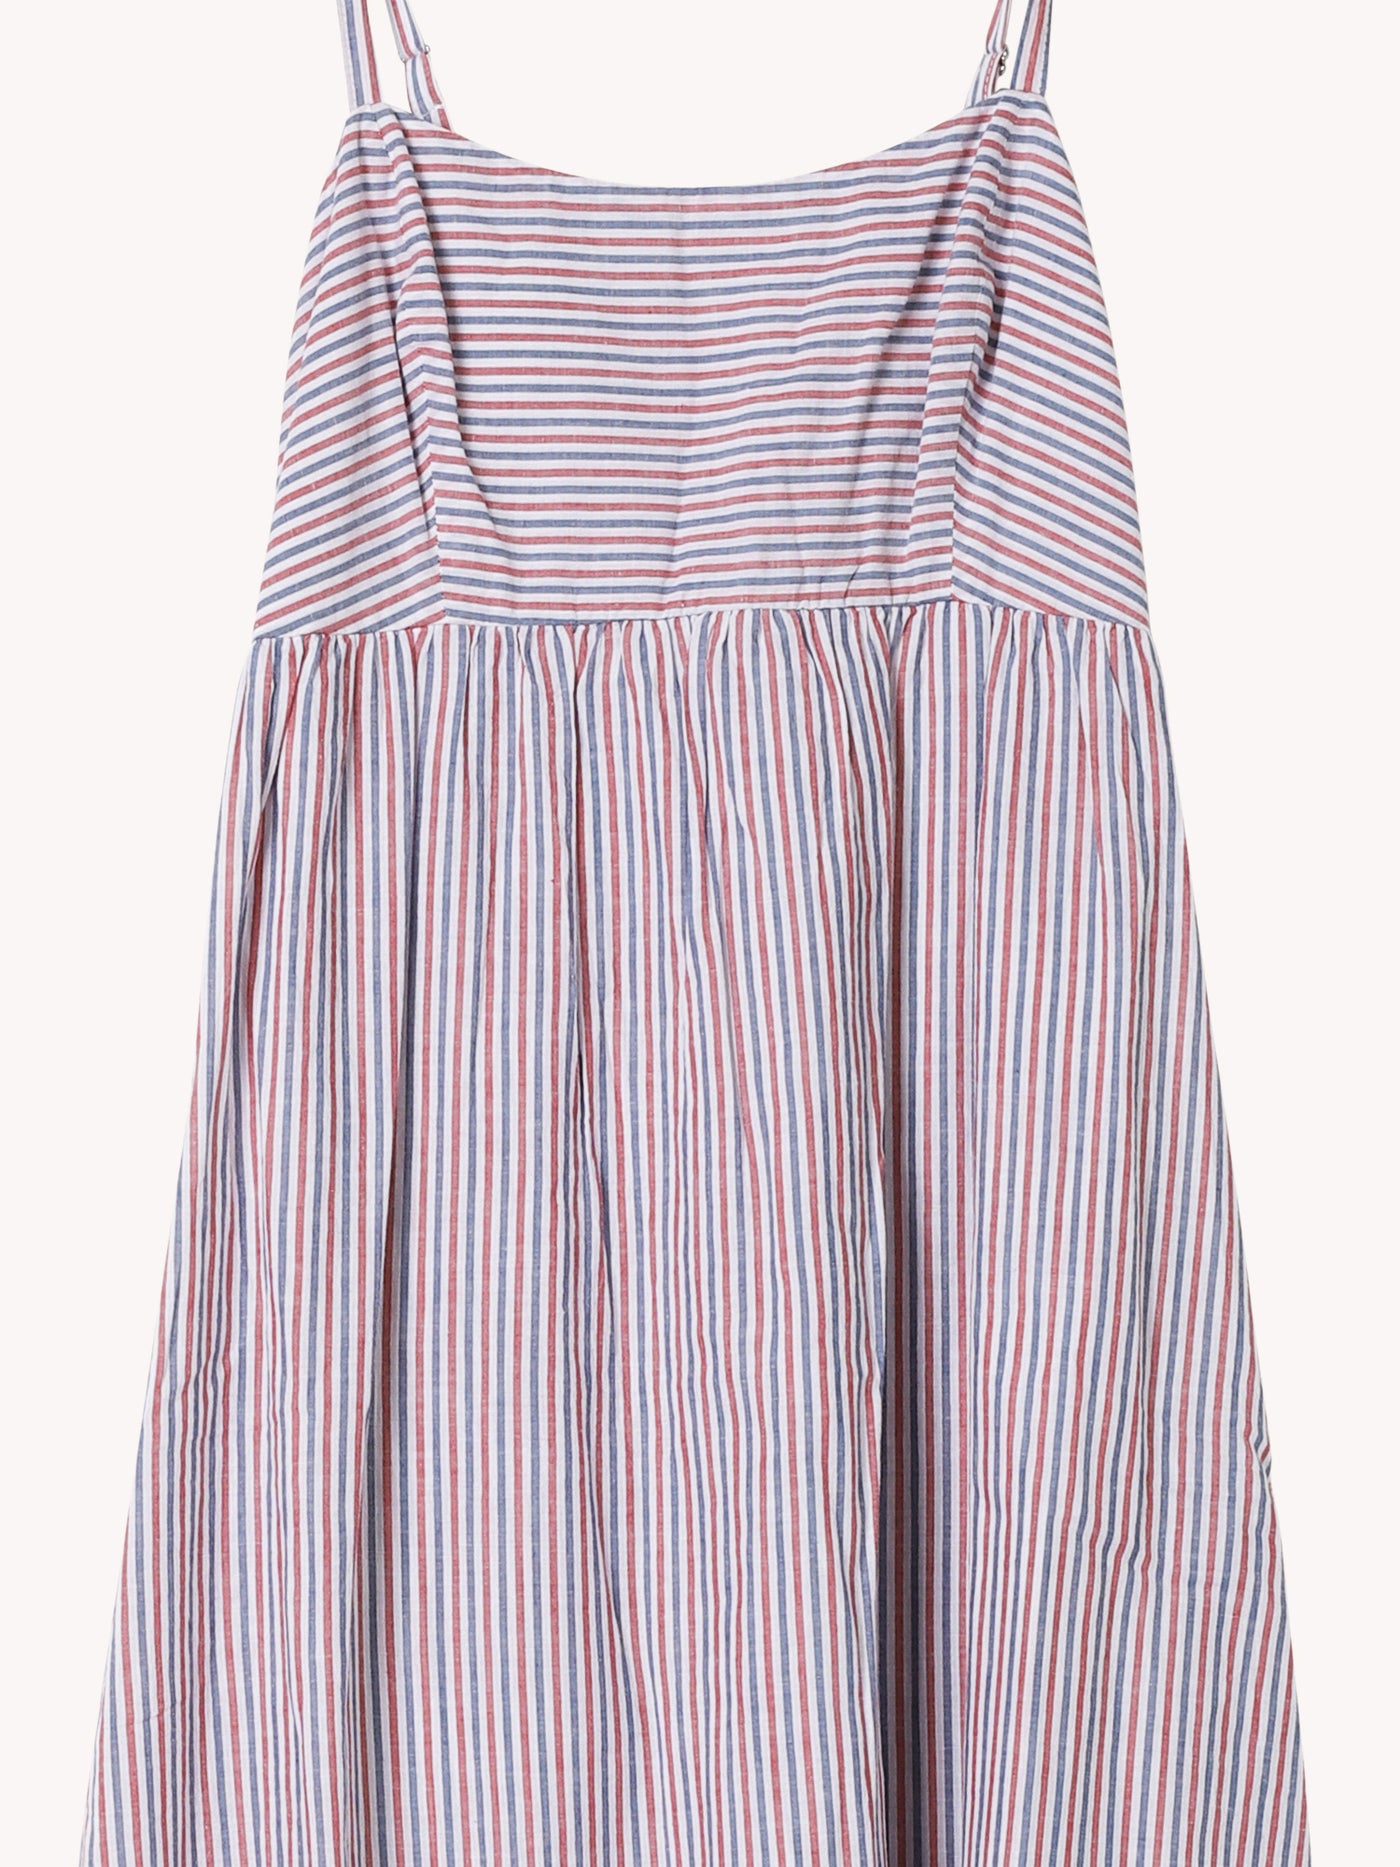 Stripe Flavia Dress